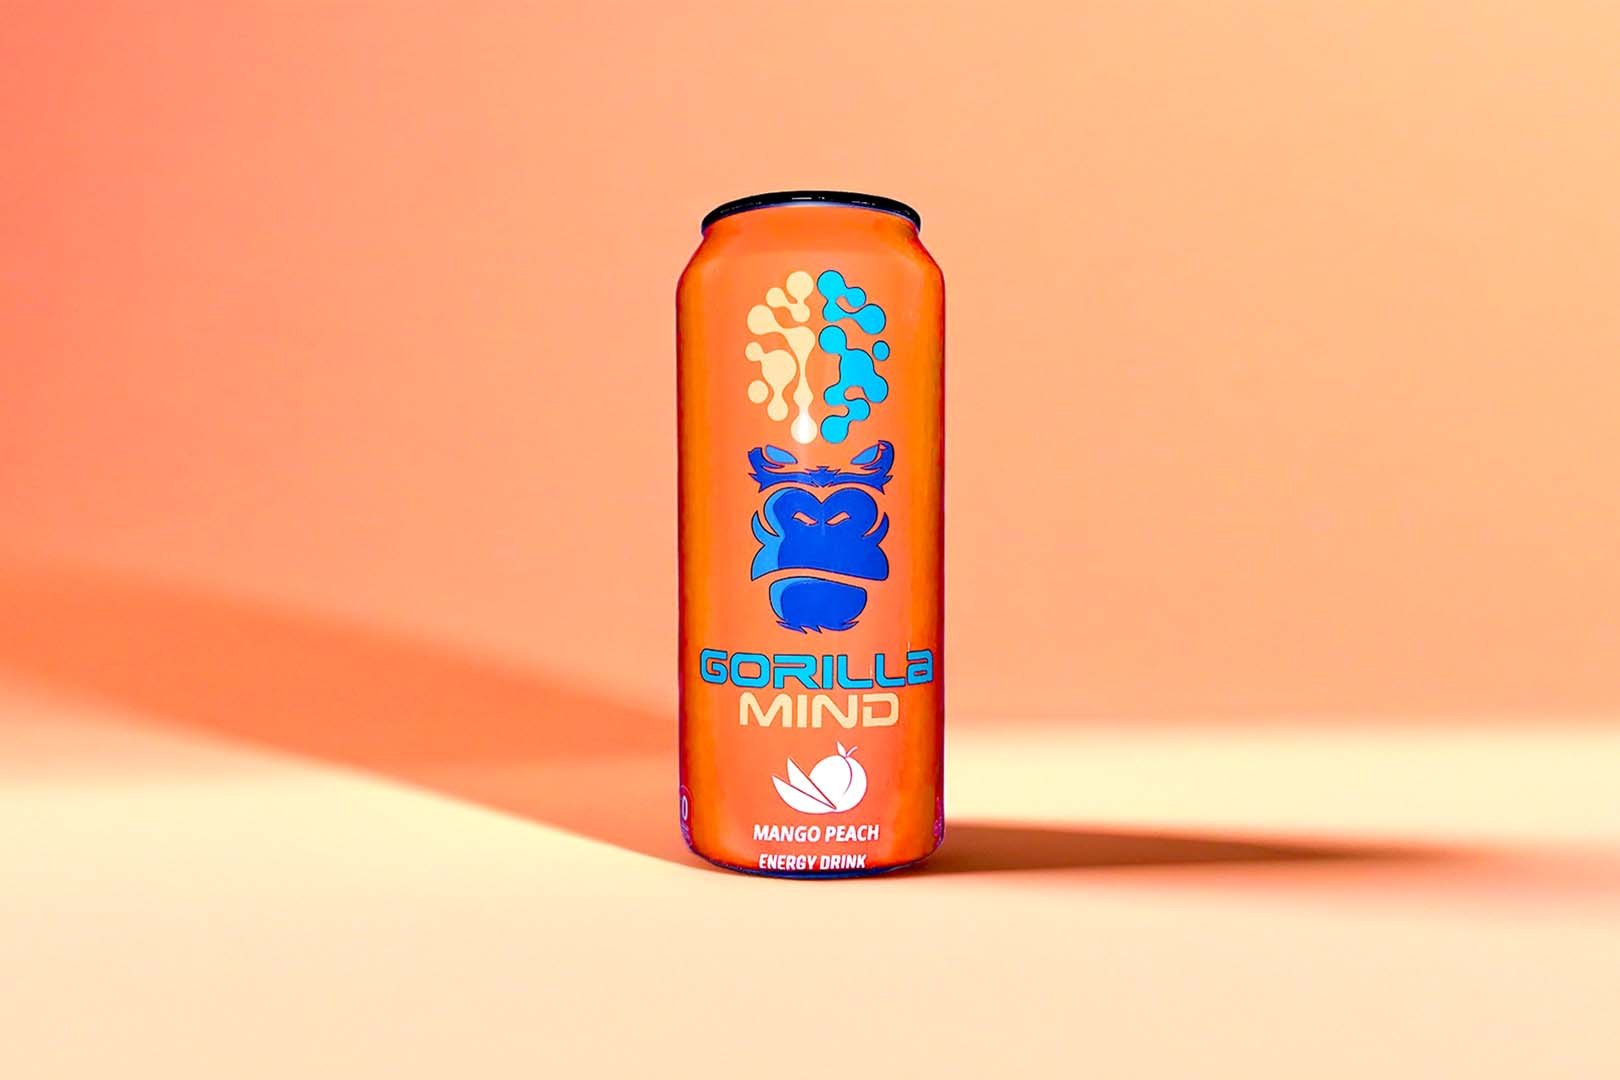 Mango Peach Gorilla Mind Energy Drink